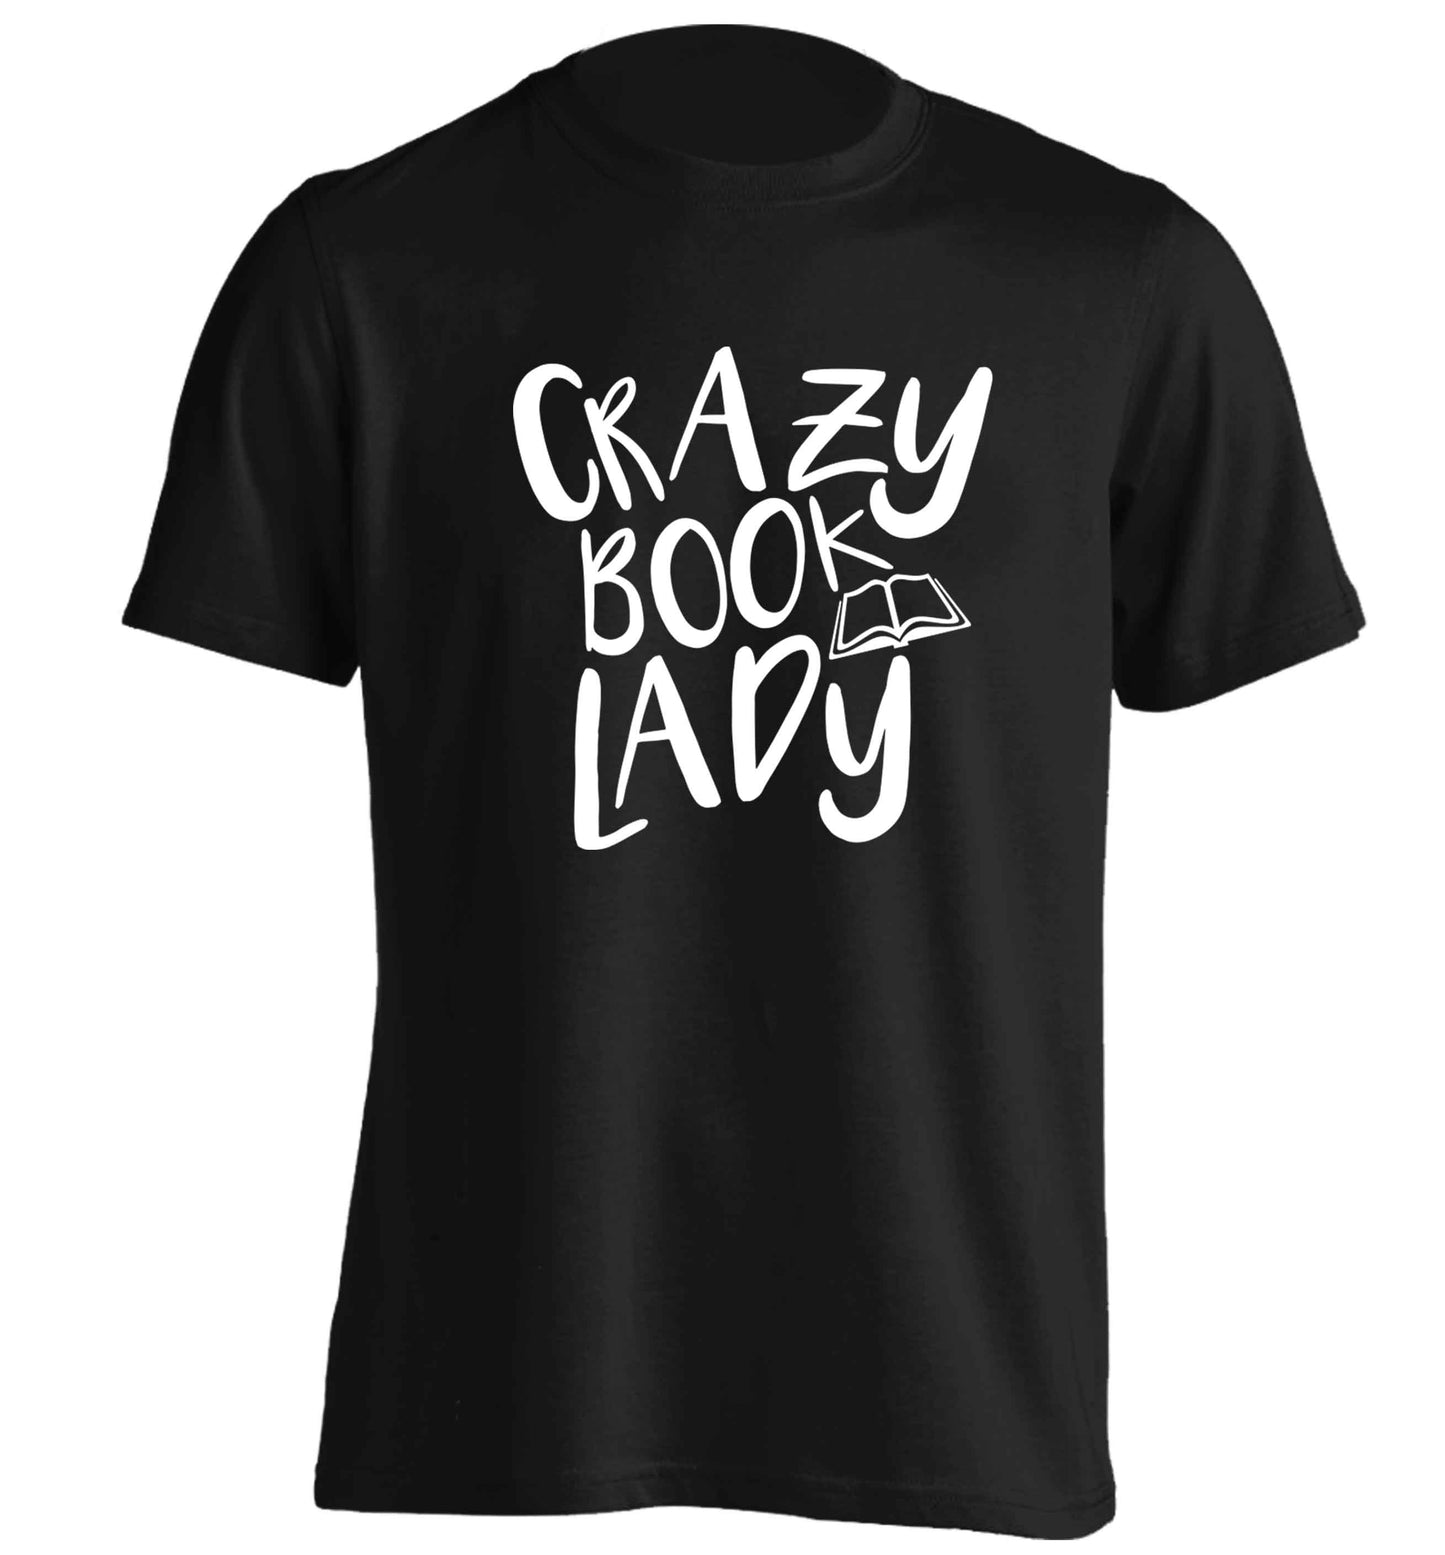 Crazy book lady adults unisex black Tshirt 2XL